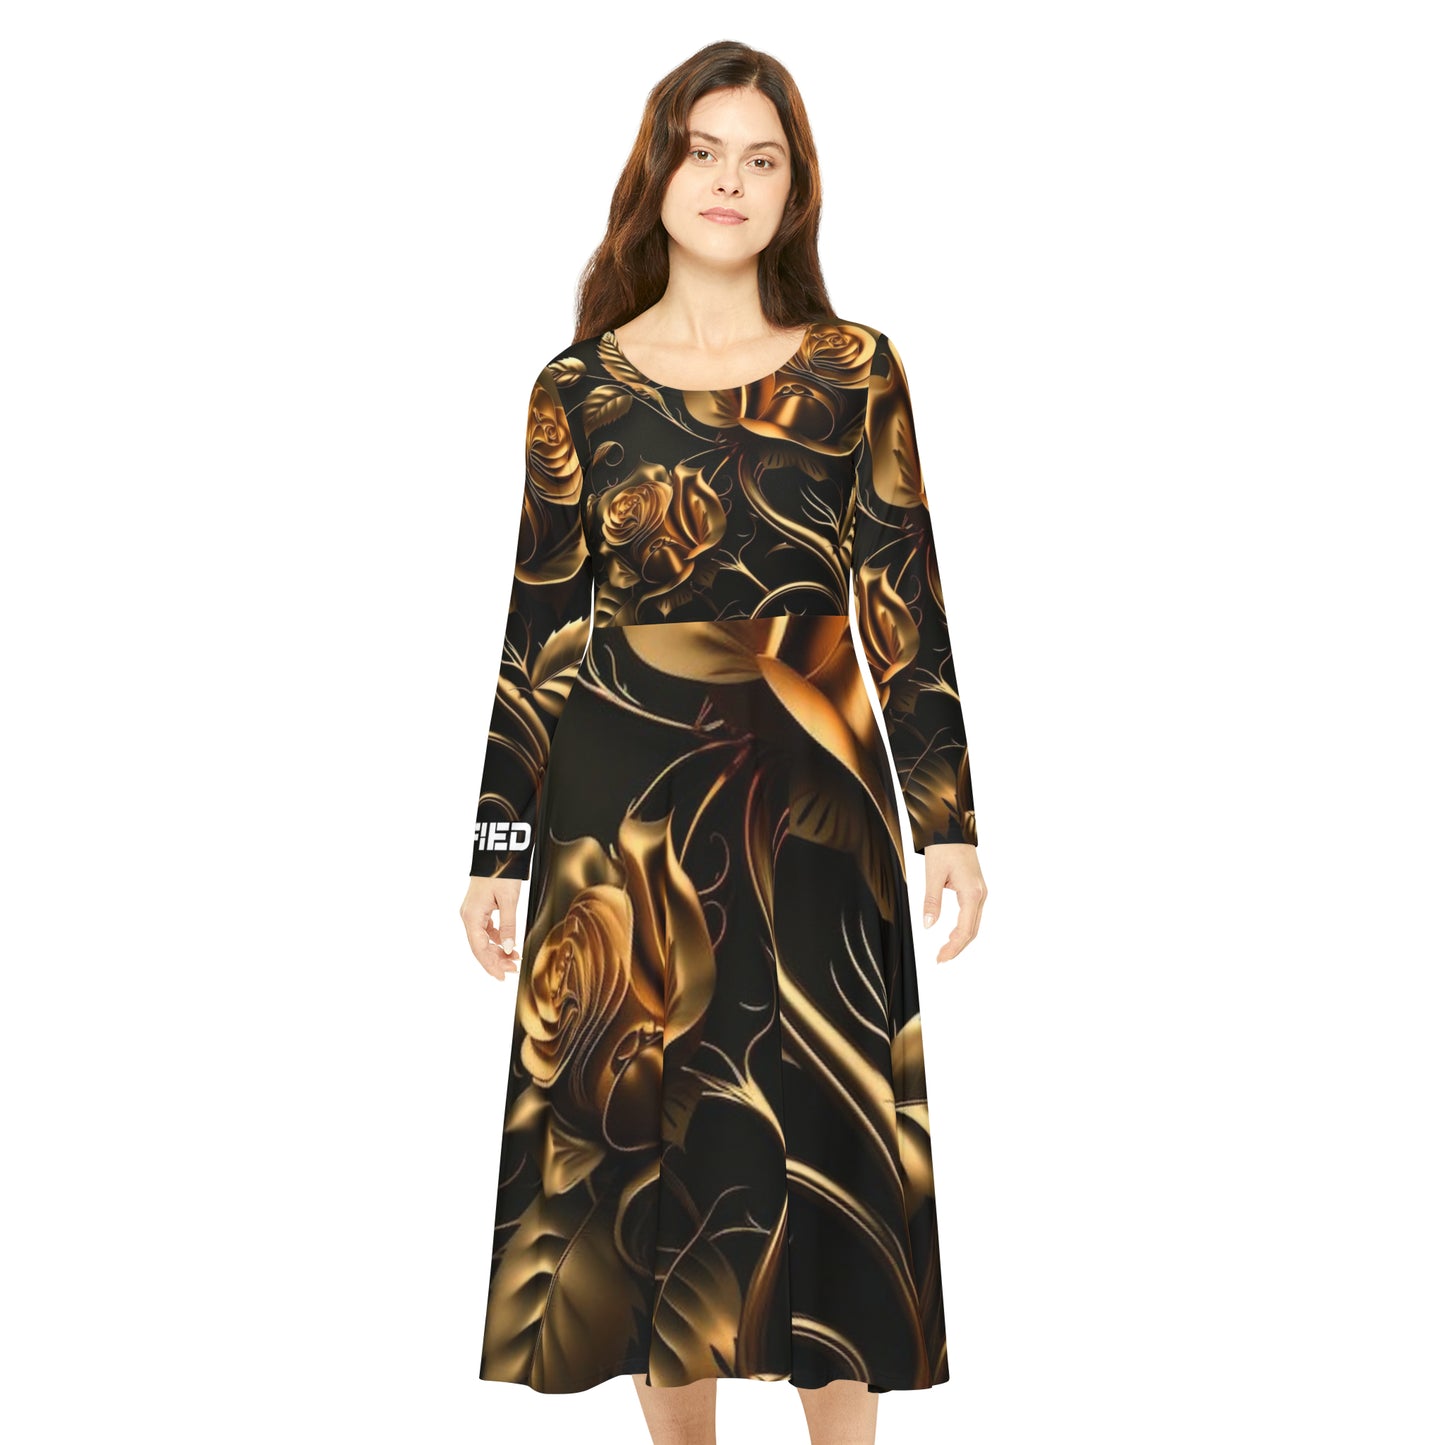 DOPiFiED Women's Long Sleeve "Gold Floral" Dance Dress